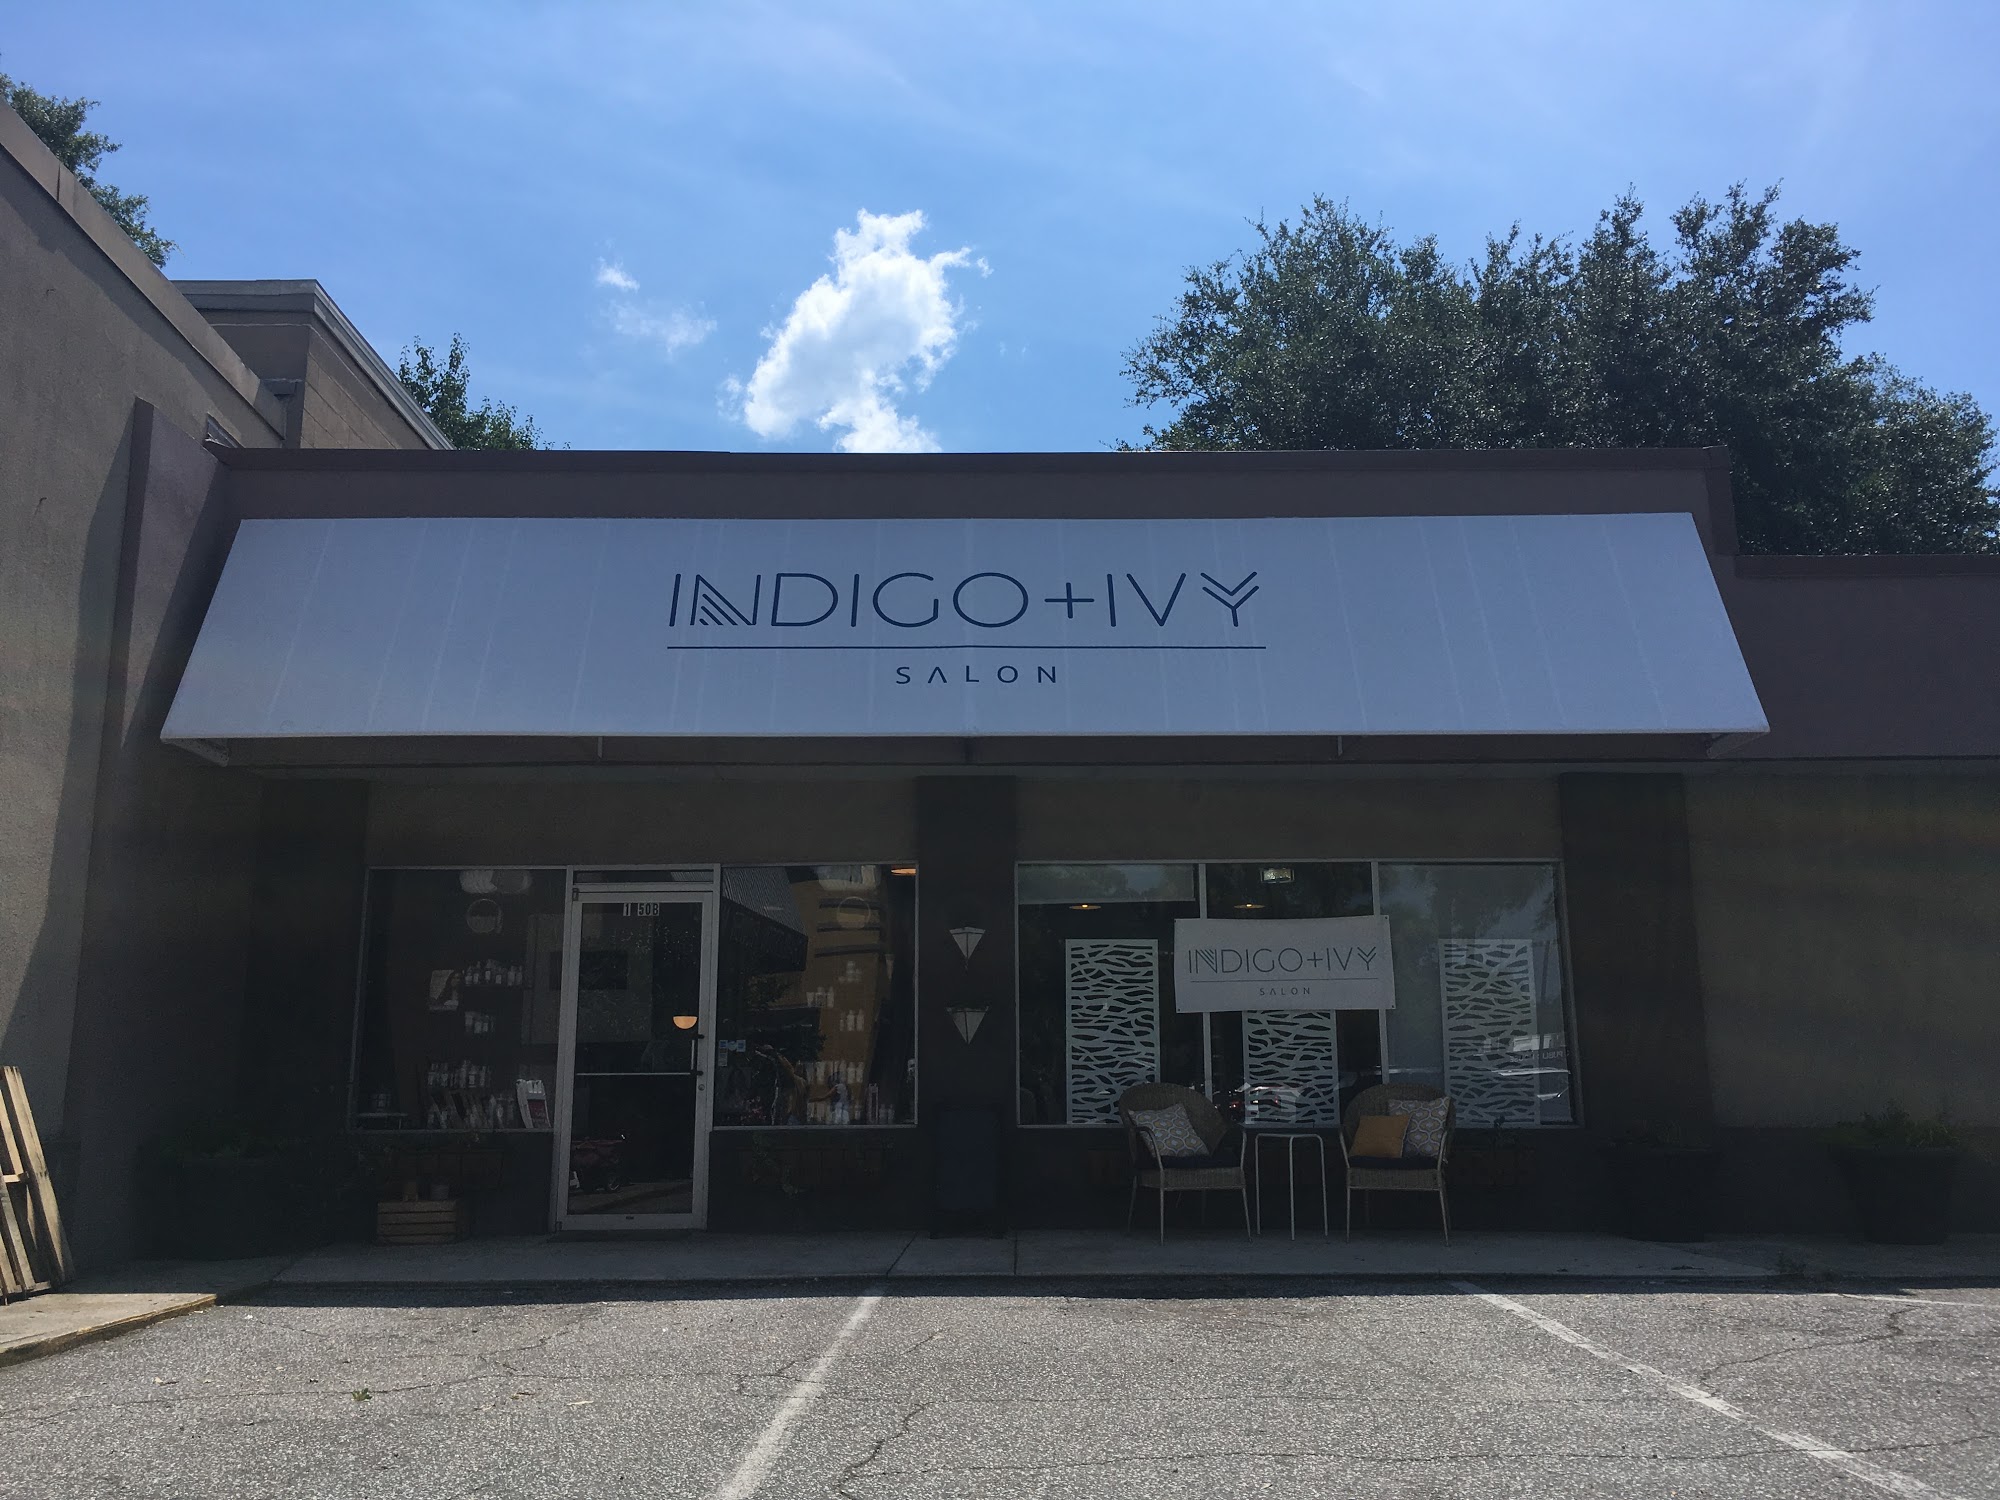 Indigo+Ivy Salon